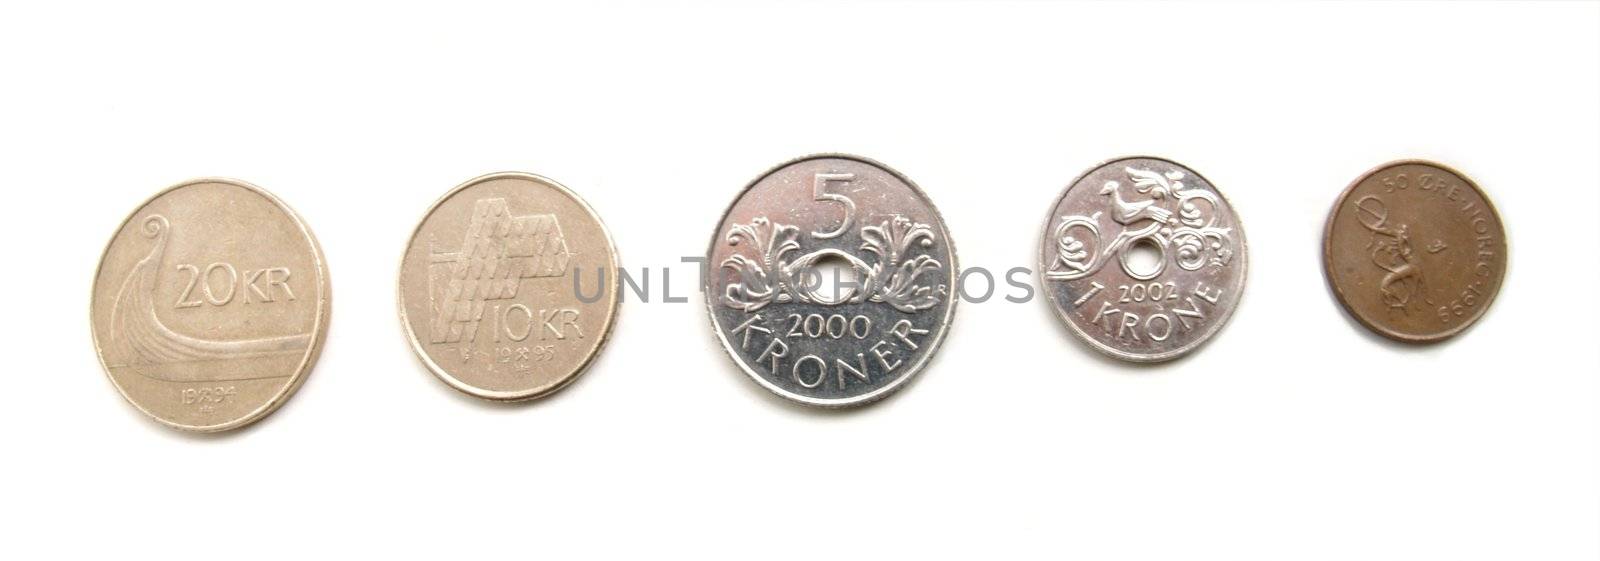 norwegian coins by viviolsen